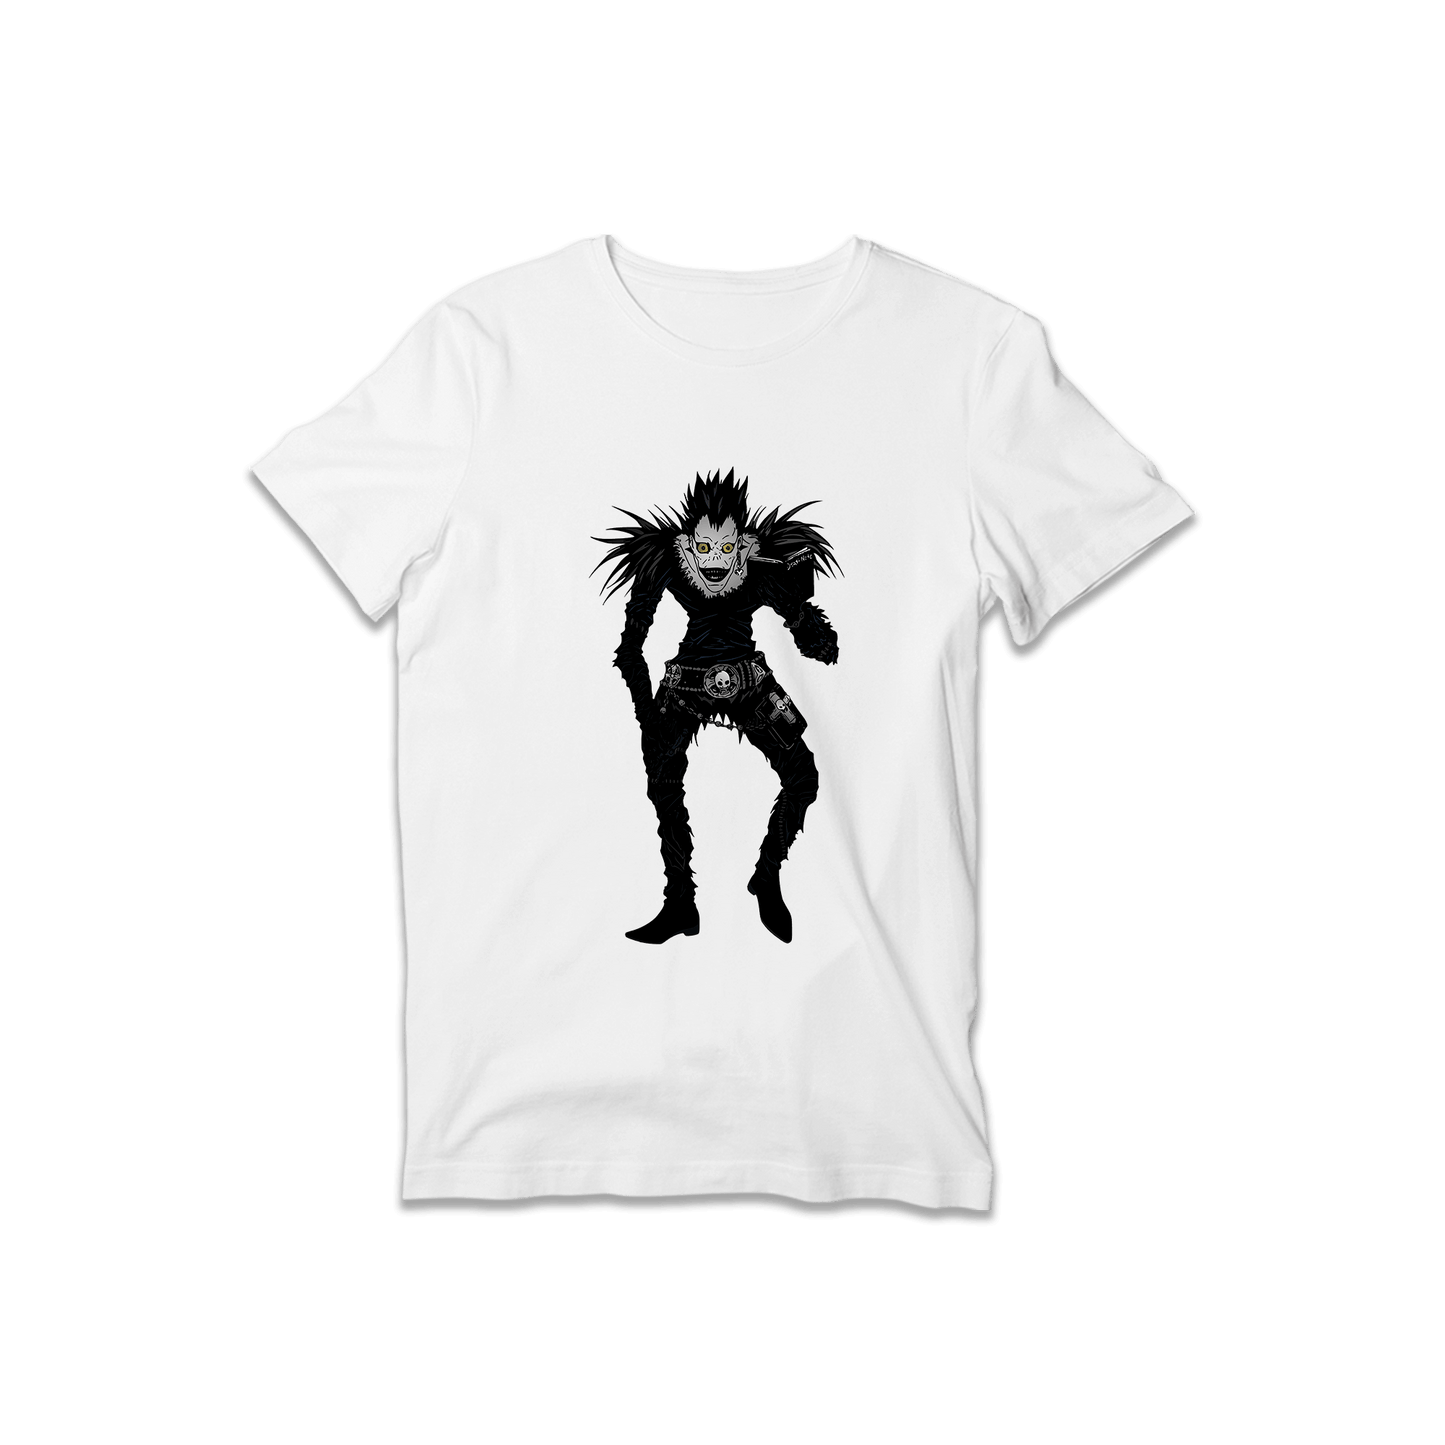 Ryuk - Death Note T-Shirt